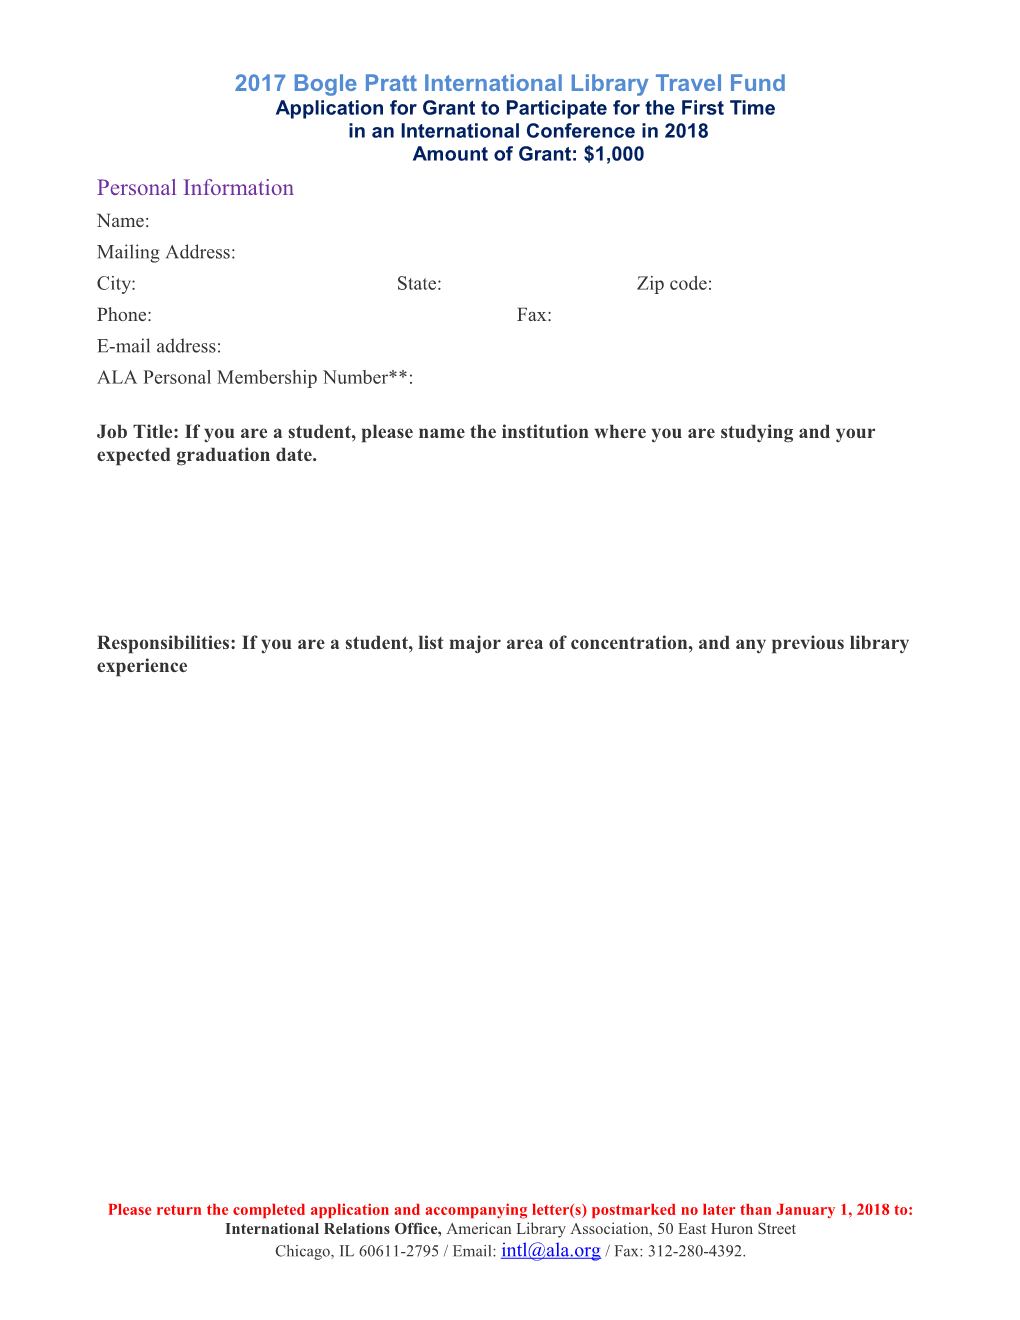 2004 Bogle Pratt International Library Travel Fund Application Form